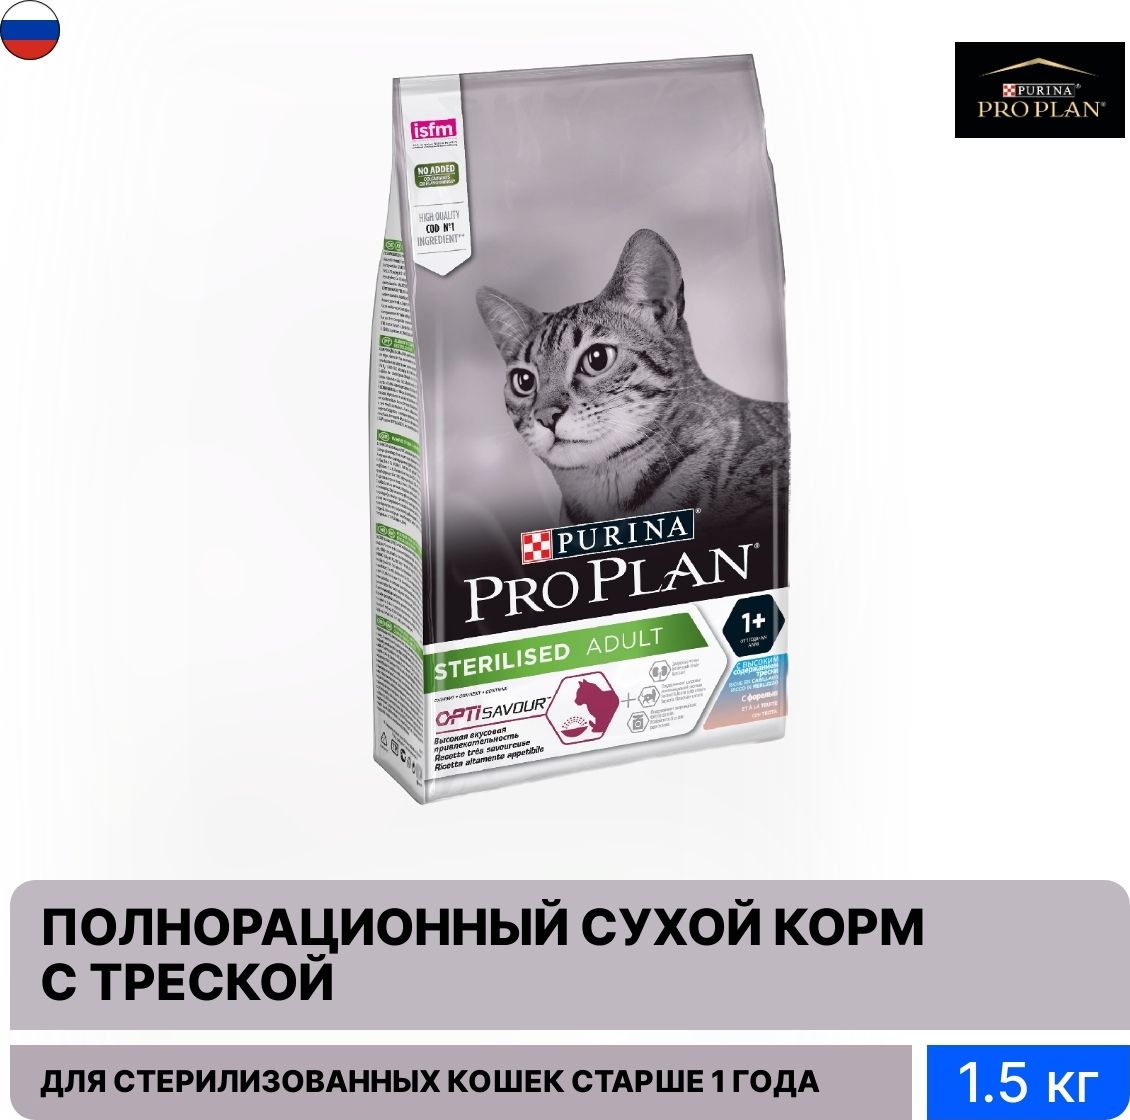 Purina Pro Plan реклама. Pro Plan Live Clear Sterilized 1,4. Purina PROPLAN Baner. Реклама корма Пурина. Pro plan для кошек стерилизованных 10 кг